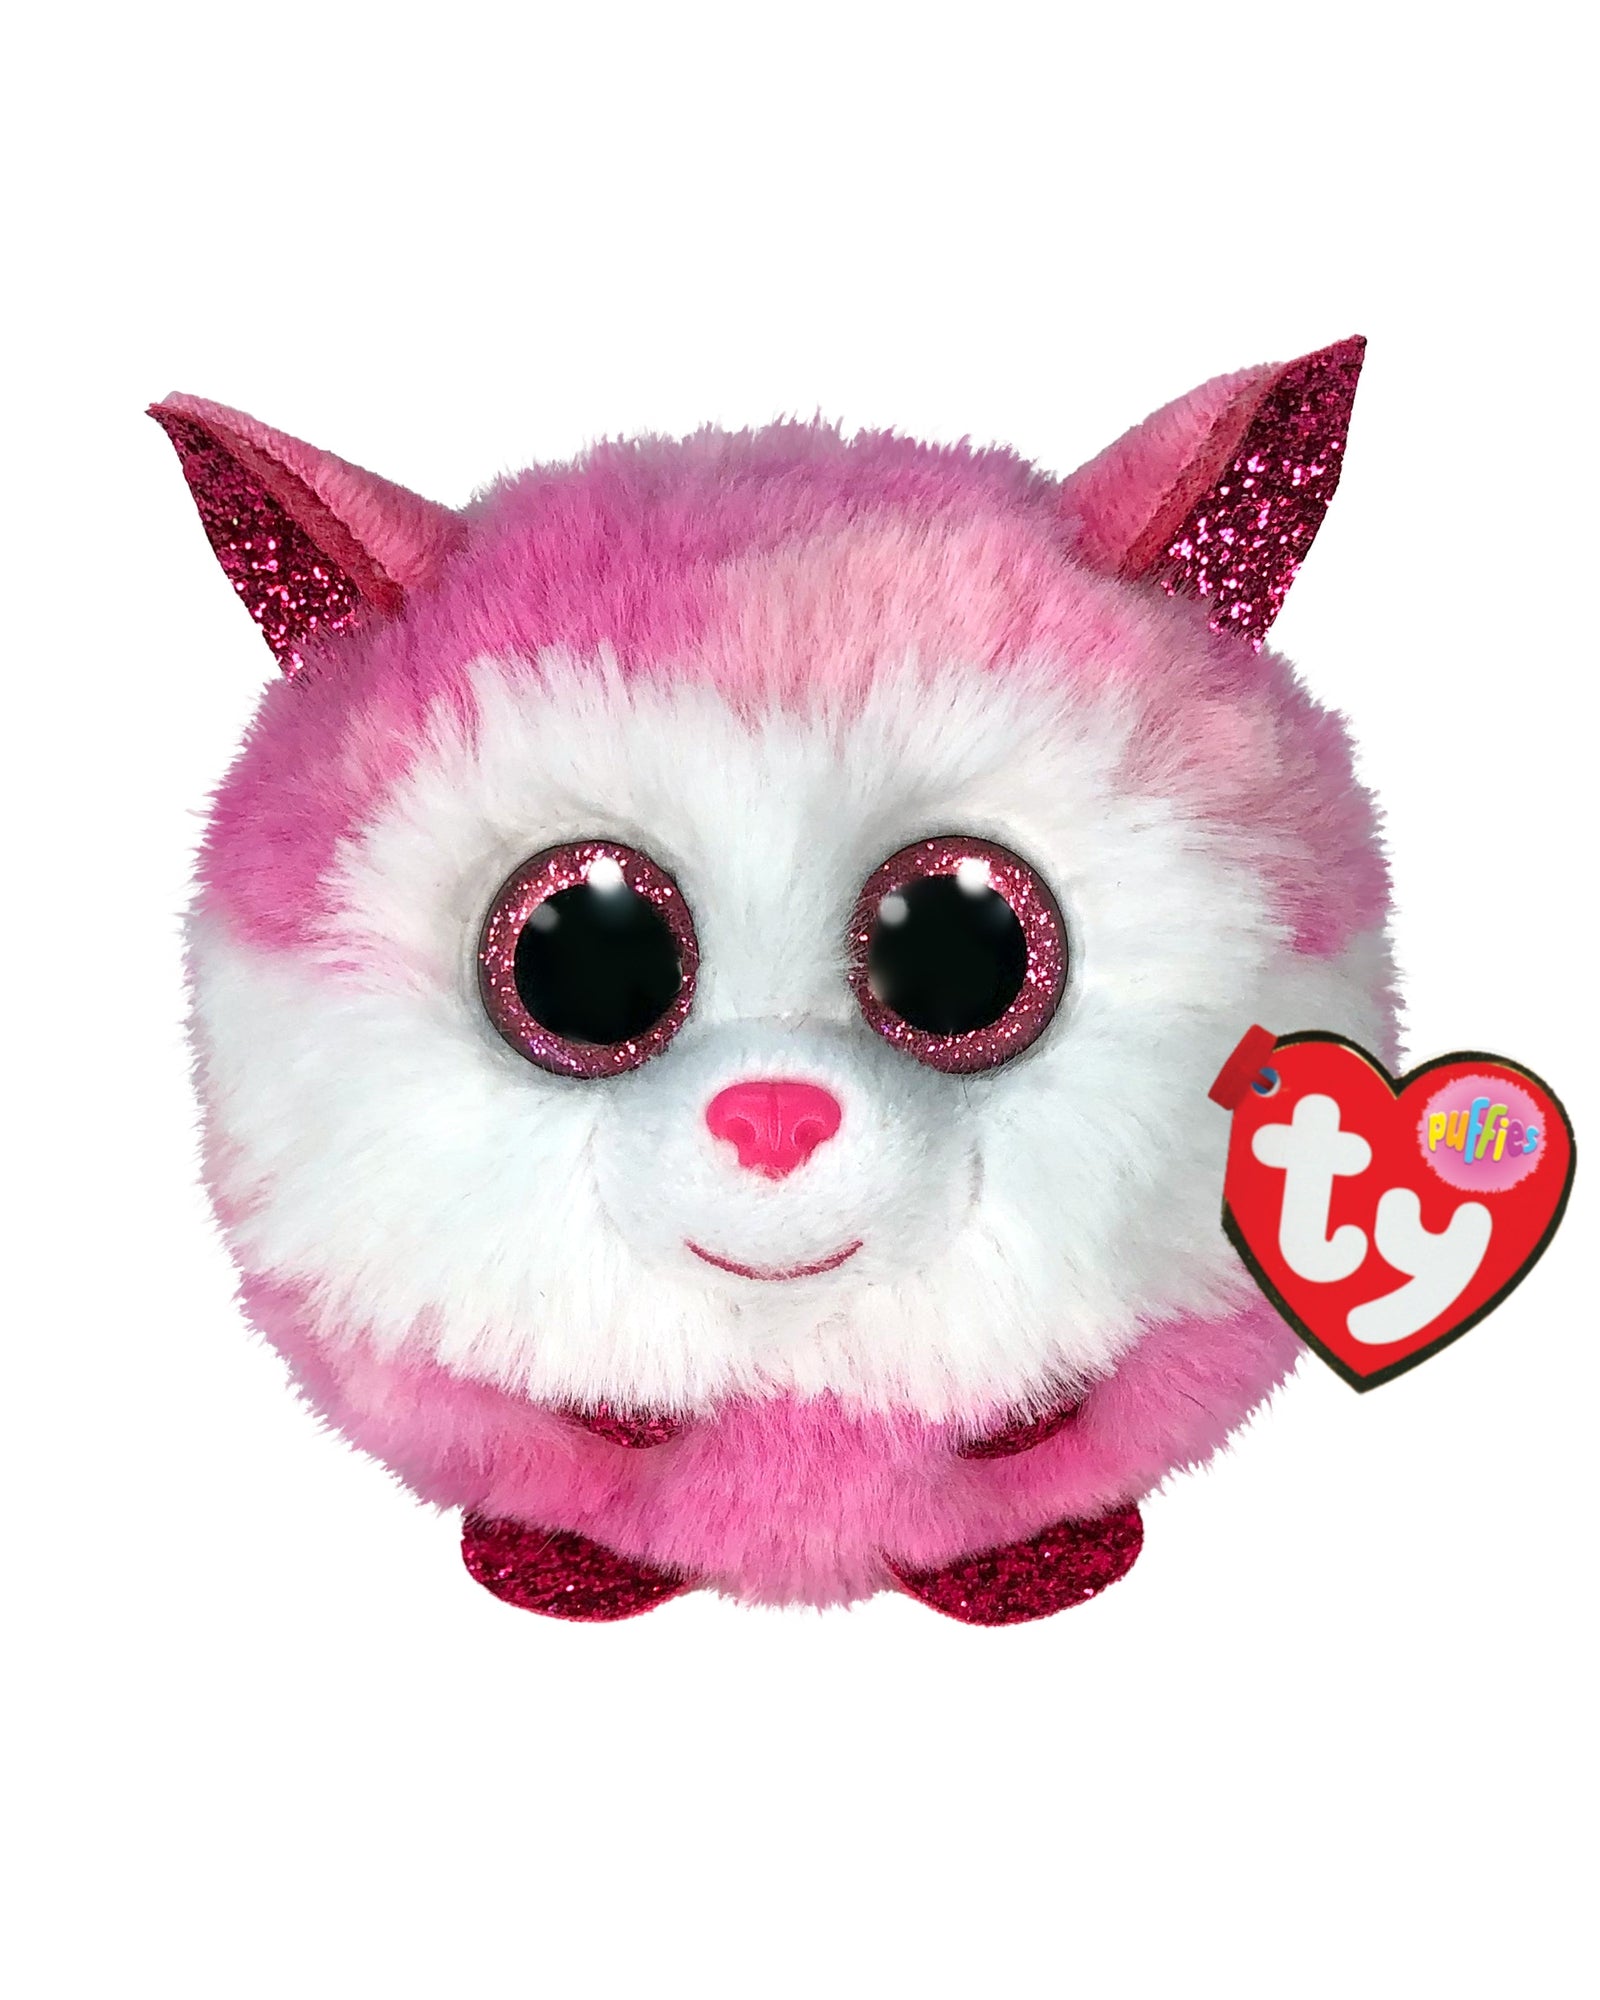 Animal Plush Toys & Stuffed Animals | Beanies Boos Toys — Kidstuff